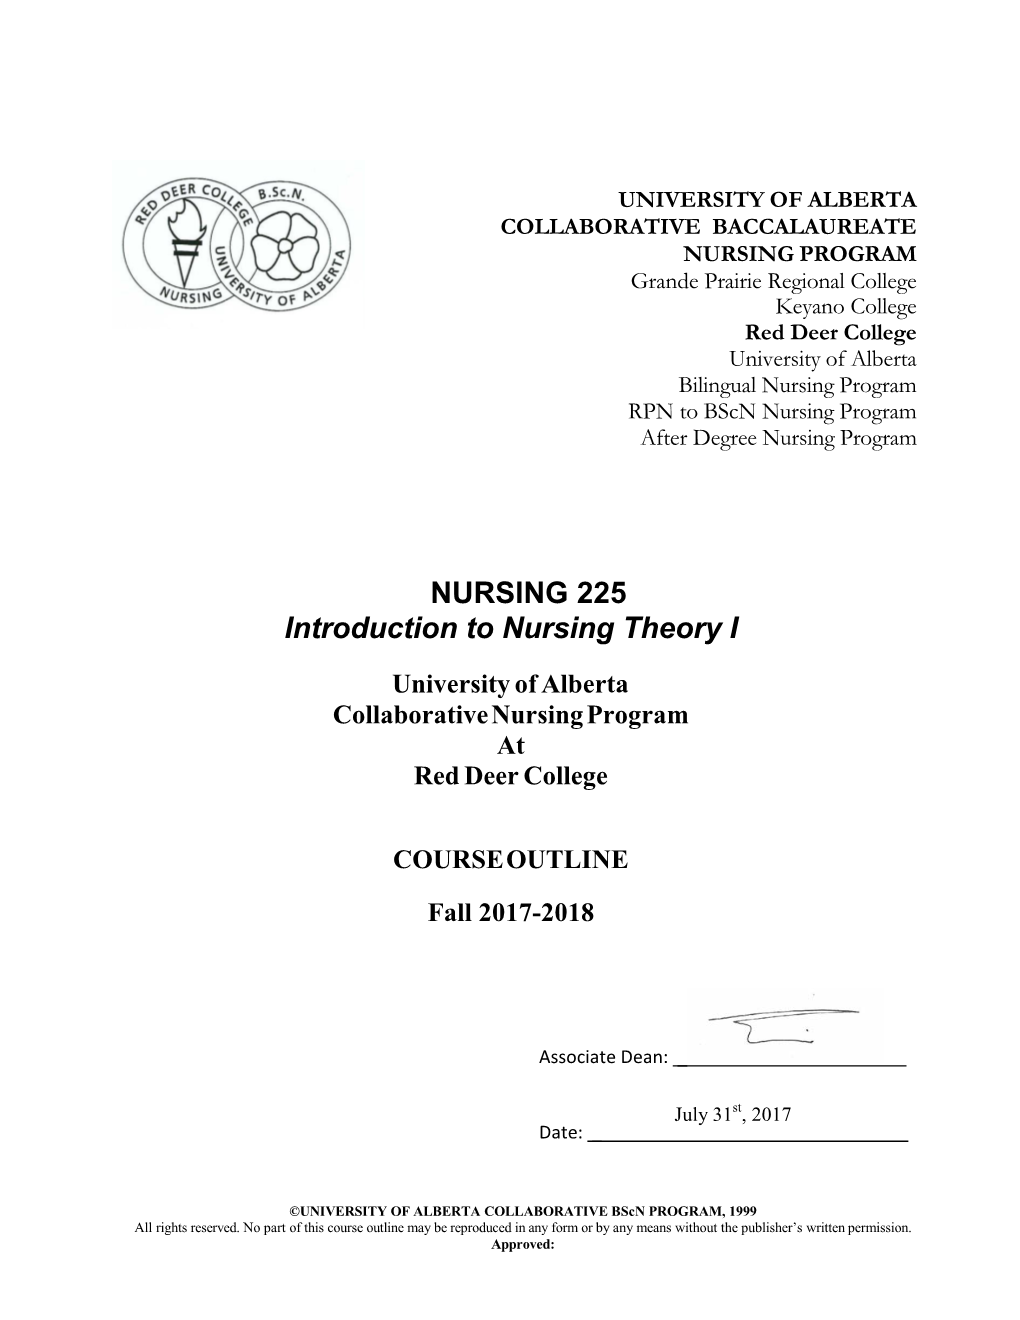 NURSING 225 Introduction to Nursing Theory I University of Alberta Collaborative Nursing Program at Red Deer College